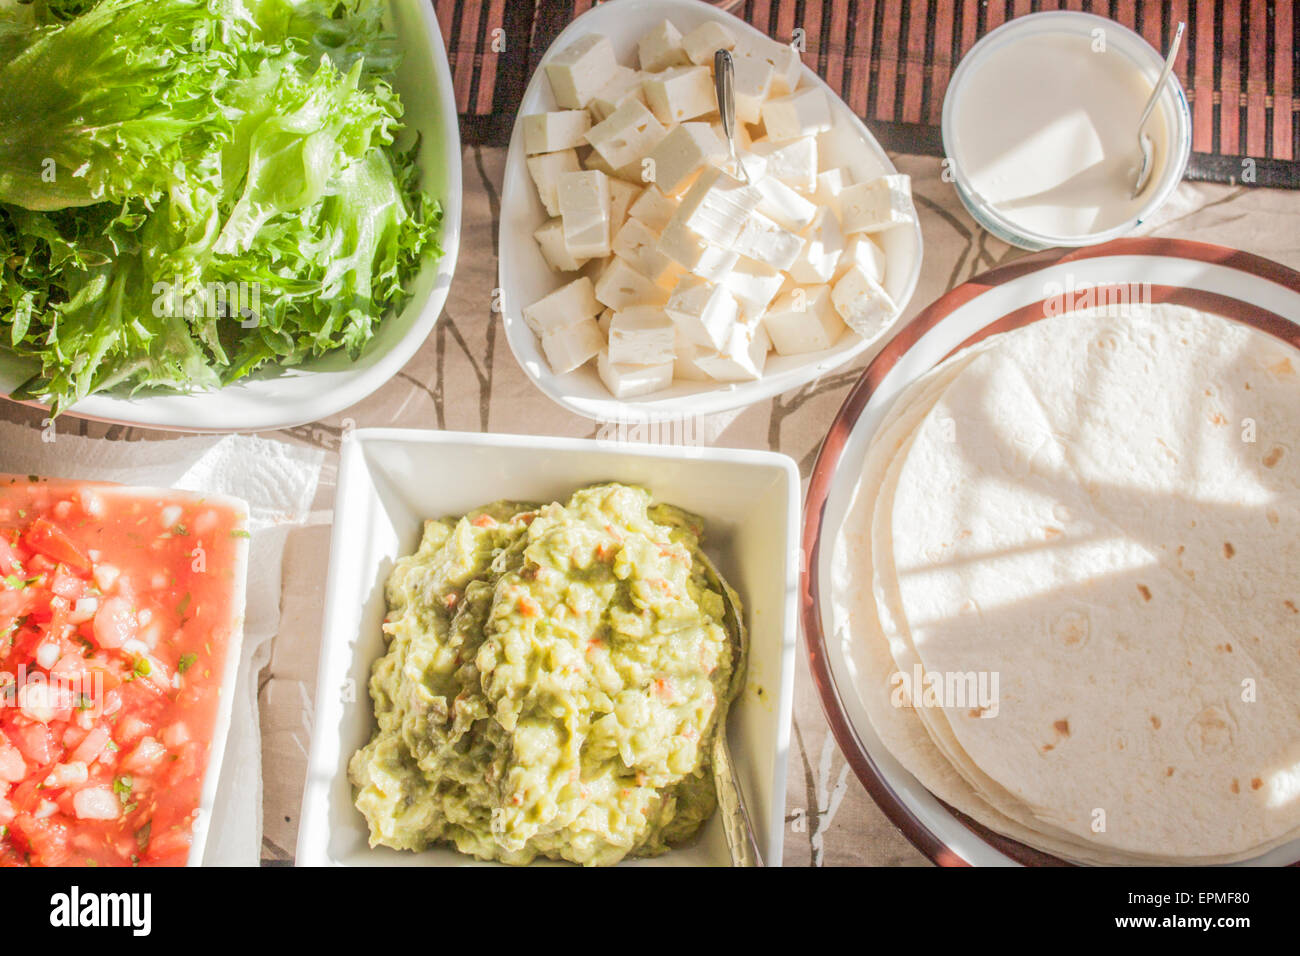 Delicious tex mex tortilla table. including tortillas,salsa, guacamole, feta cheese and salad Stock Photo